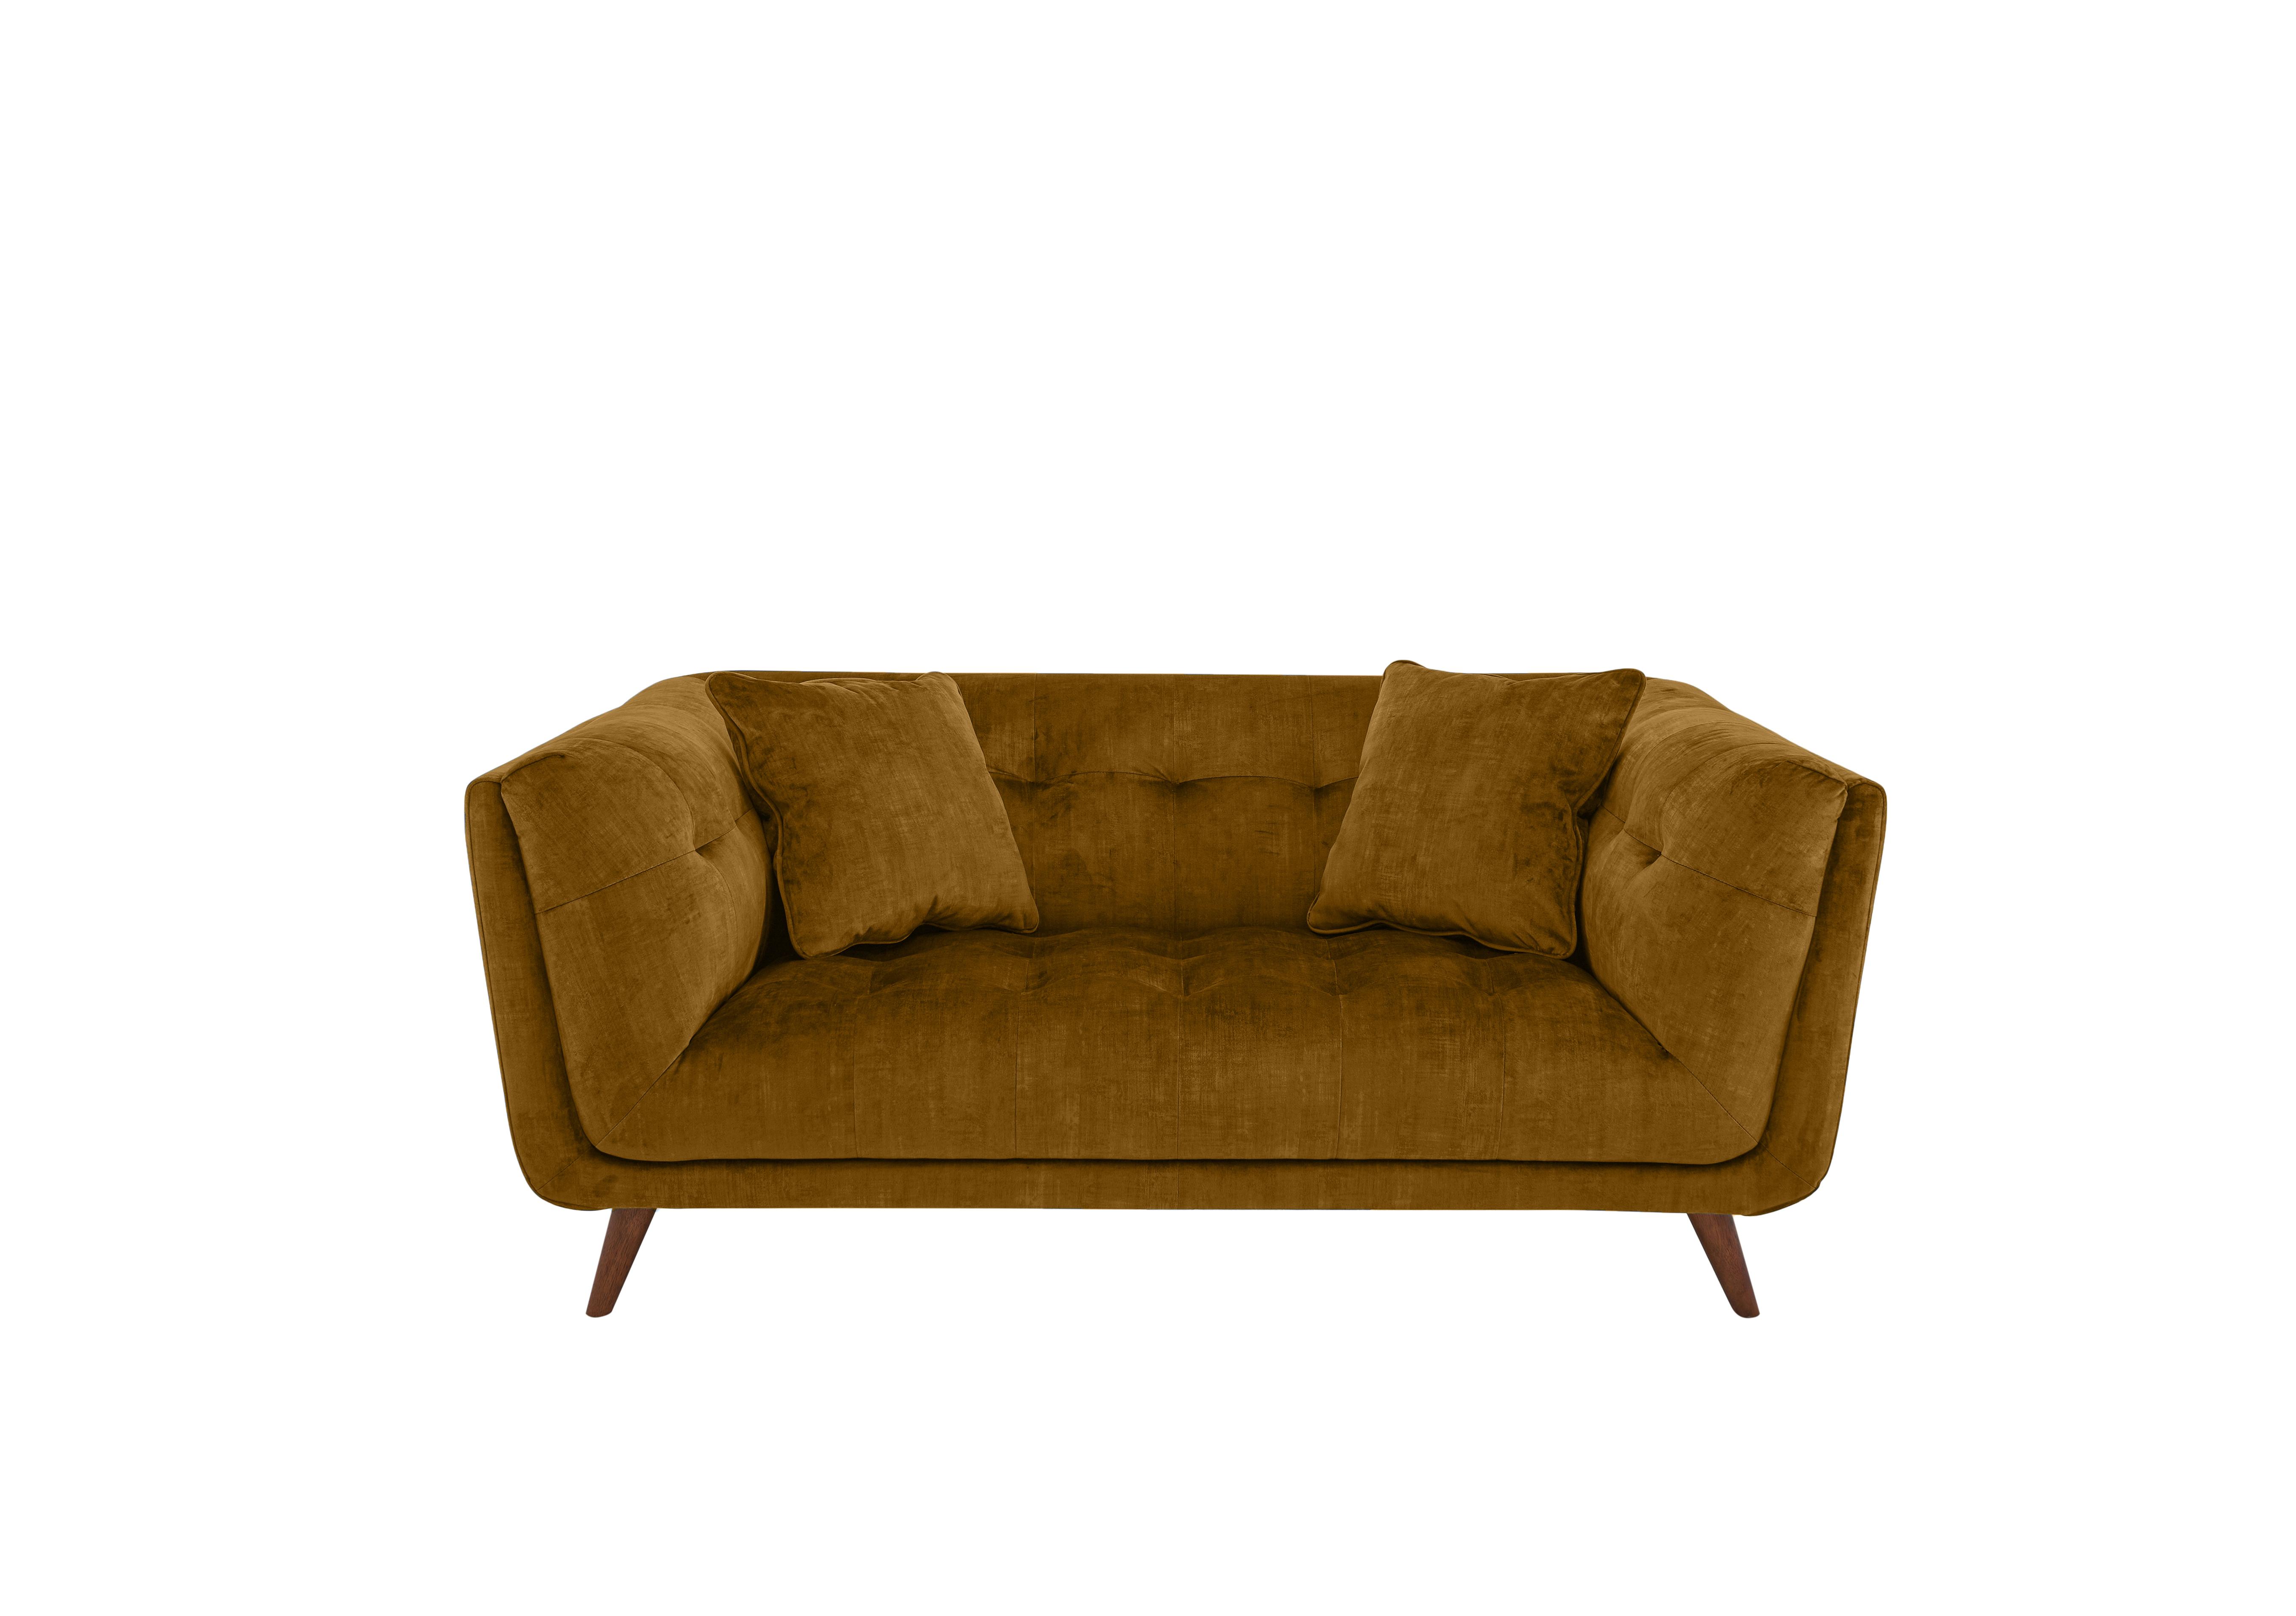 Rene 2 Seater Fabric Sofa in 52002 Heritage Saffron Wa Ft on Furniture Village